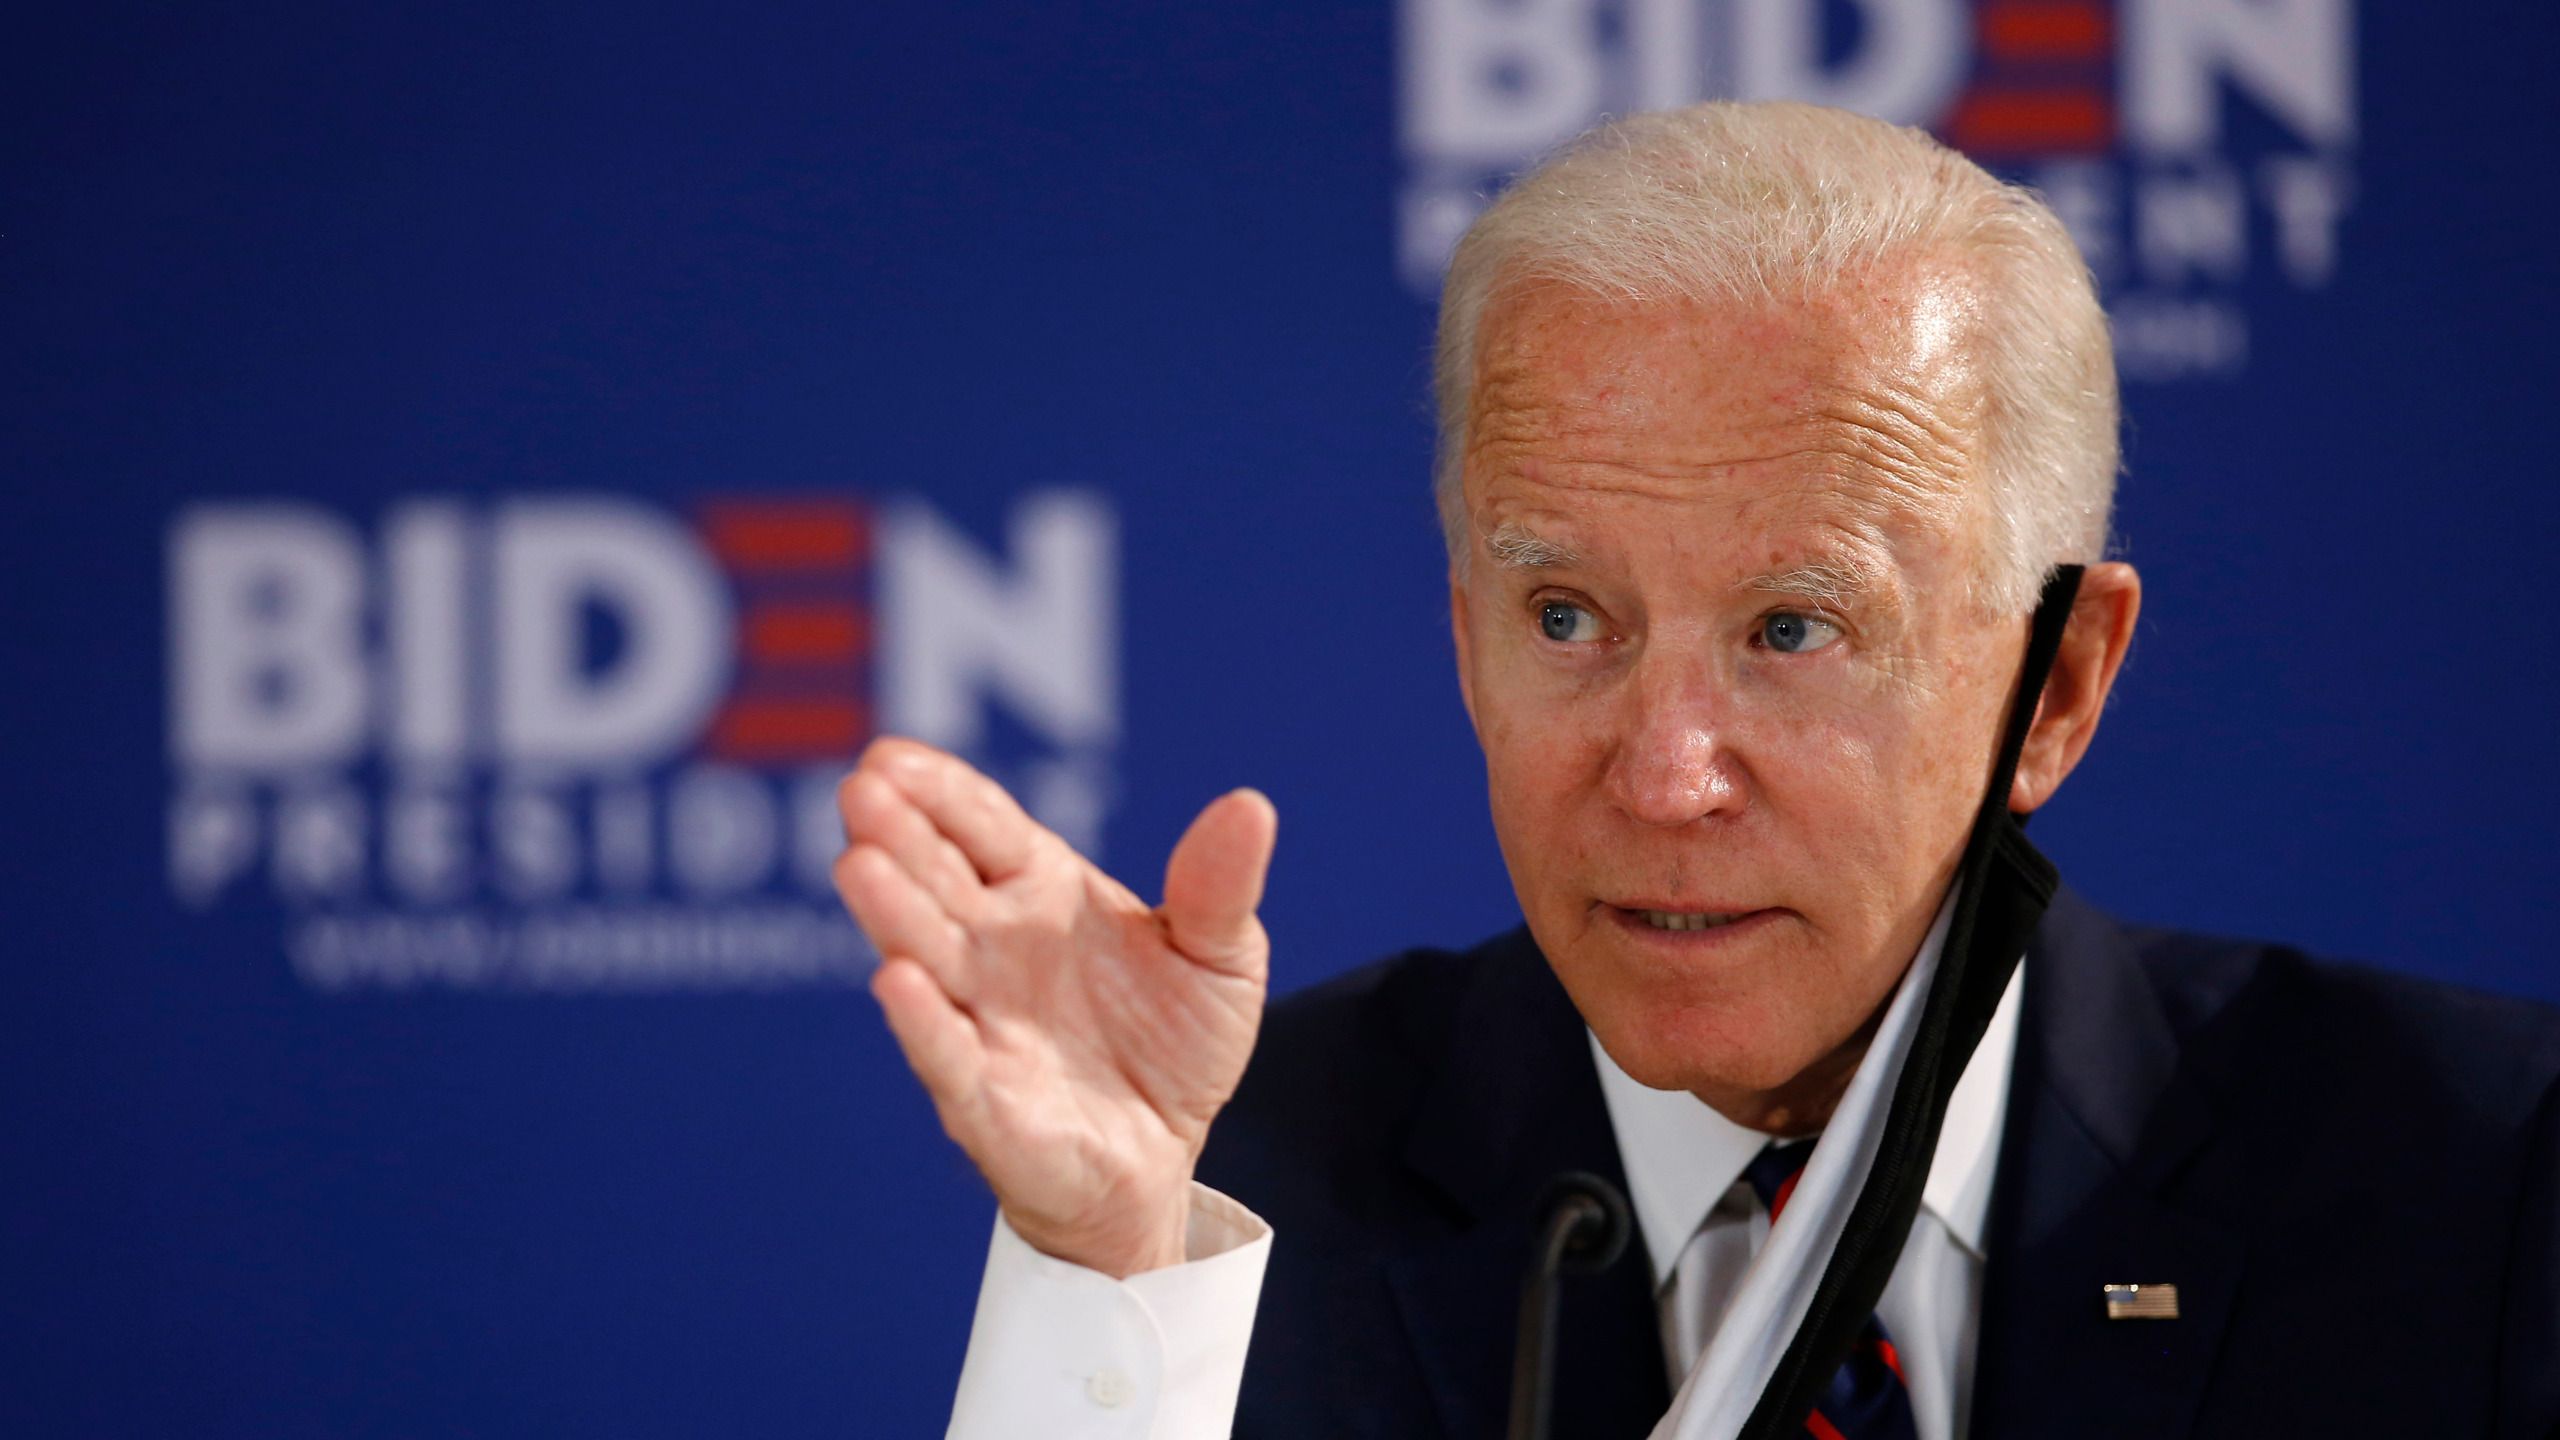 Biden's VP list narrows: Warren, Harris, Susan Rice, others